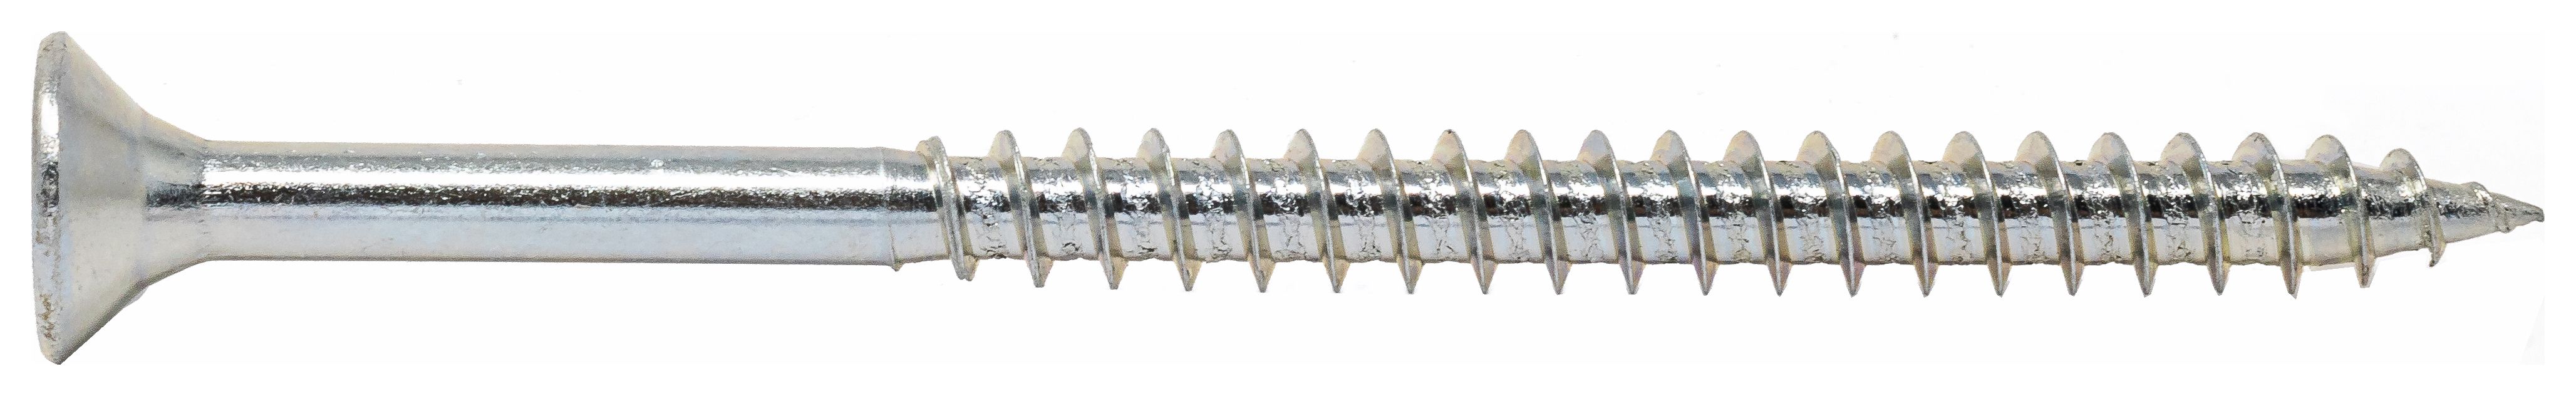 Wickes Single Thread Zinc Plated Screw - 3.5 X 16mm Pack Of 200